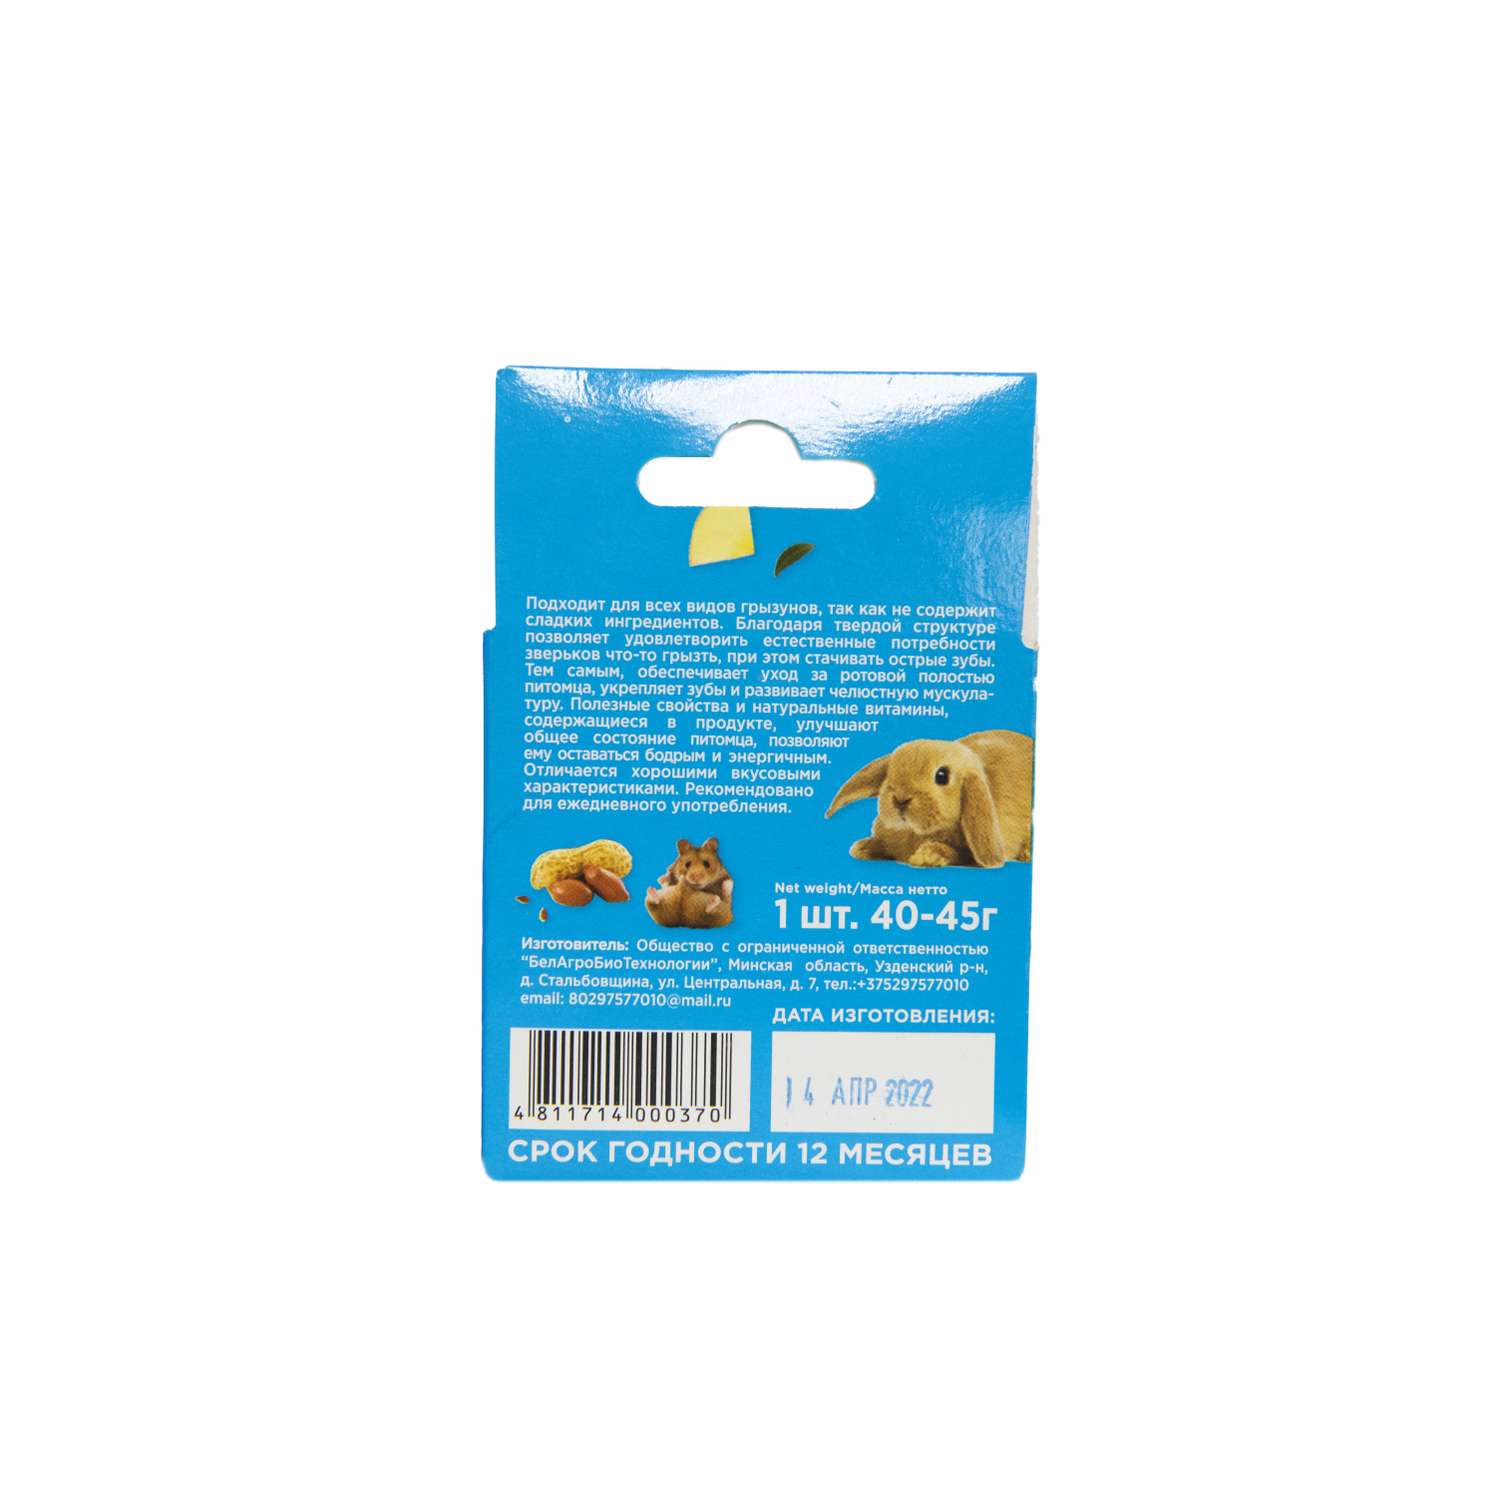 Корзинка фруктово-ореховая Little King картонная упаковка 40 г - фото 2